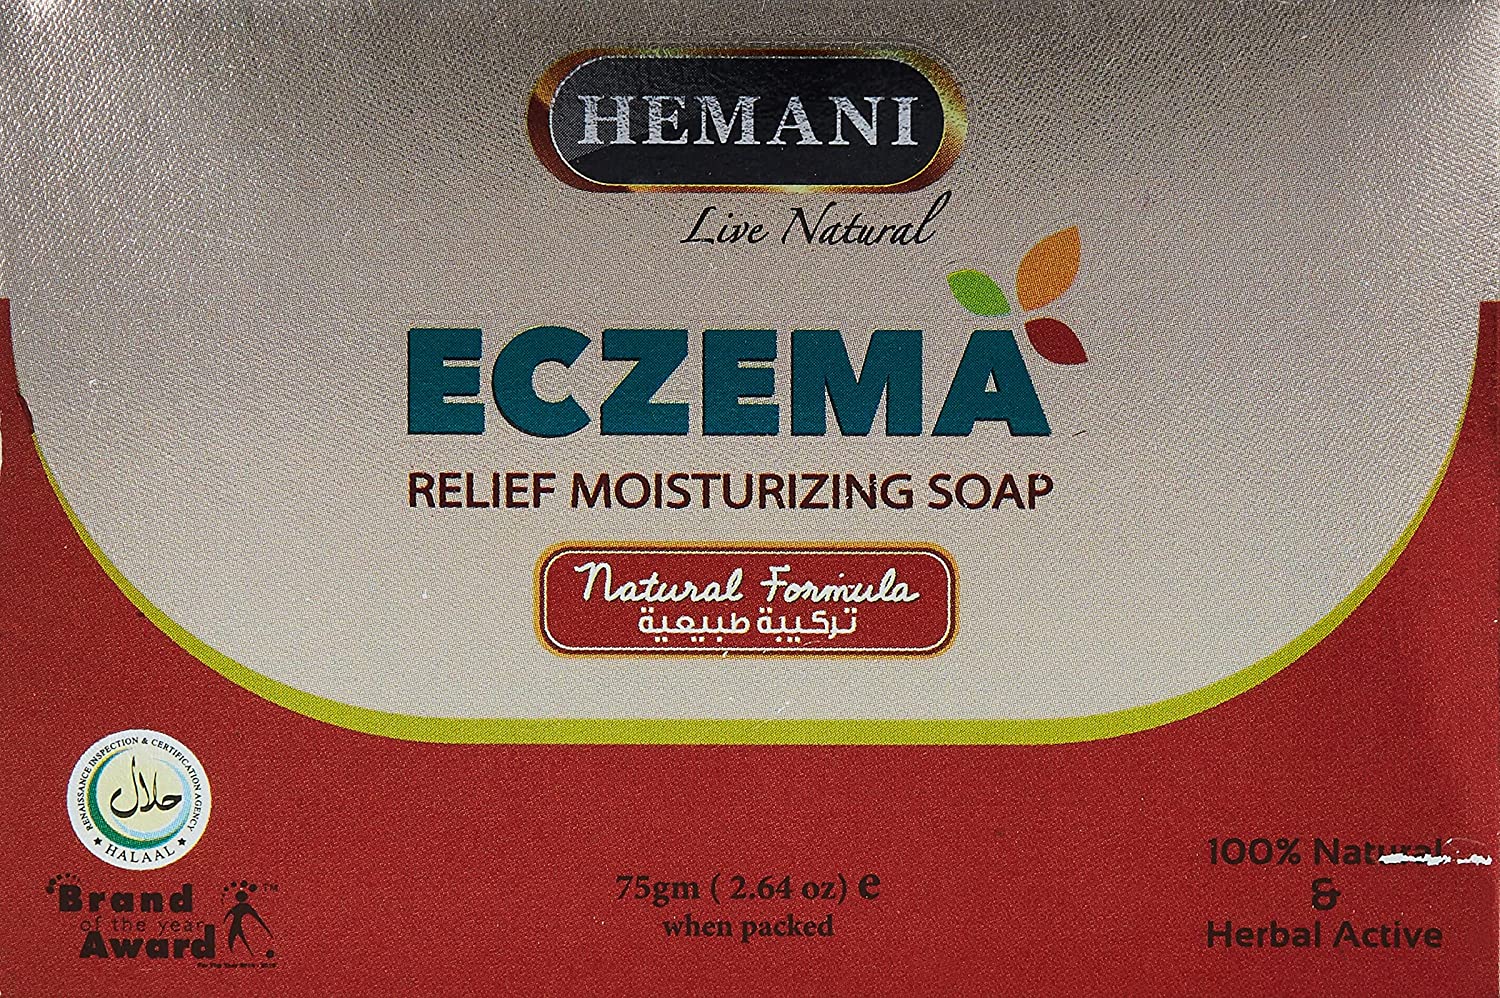 Hemani Eczema Relief Moisturizing Soap 75g